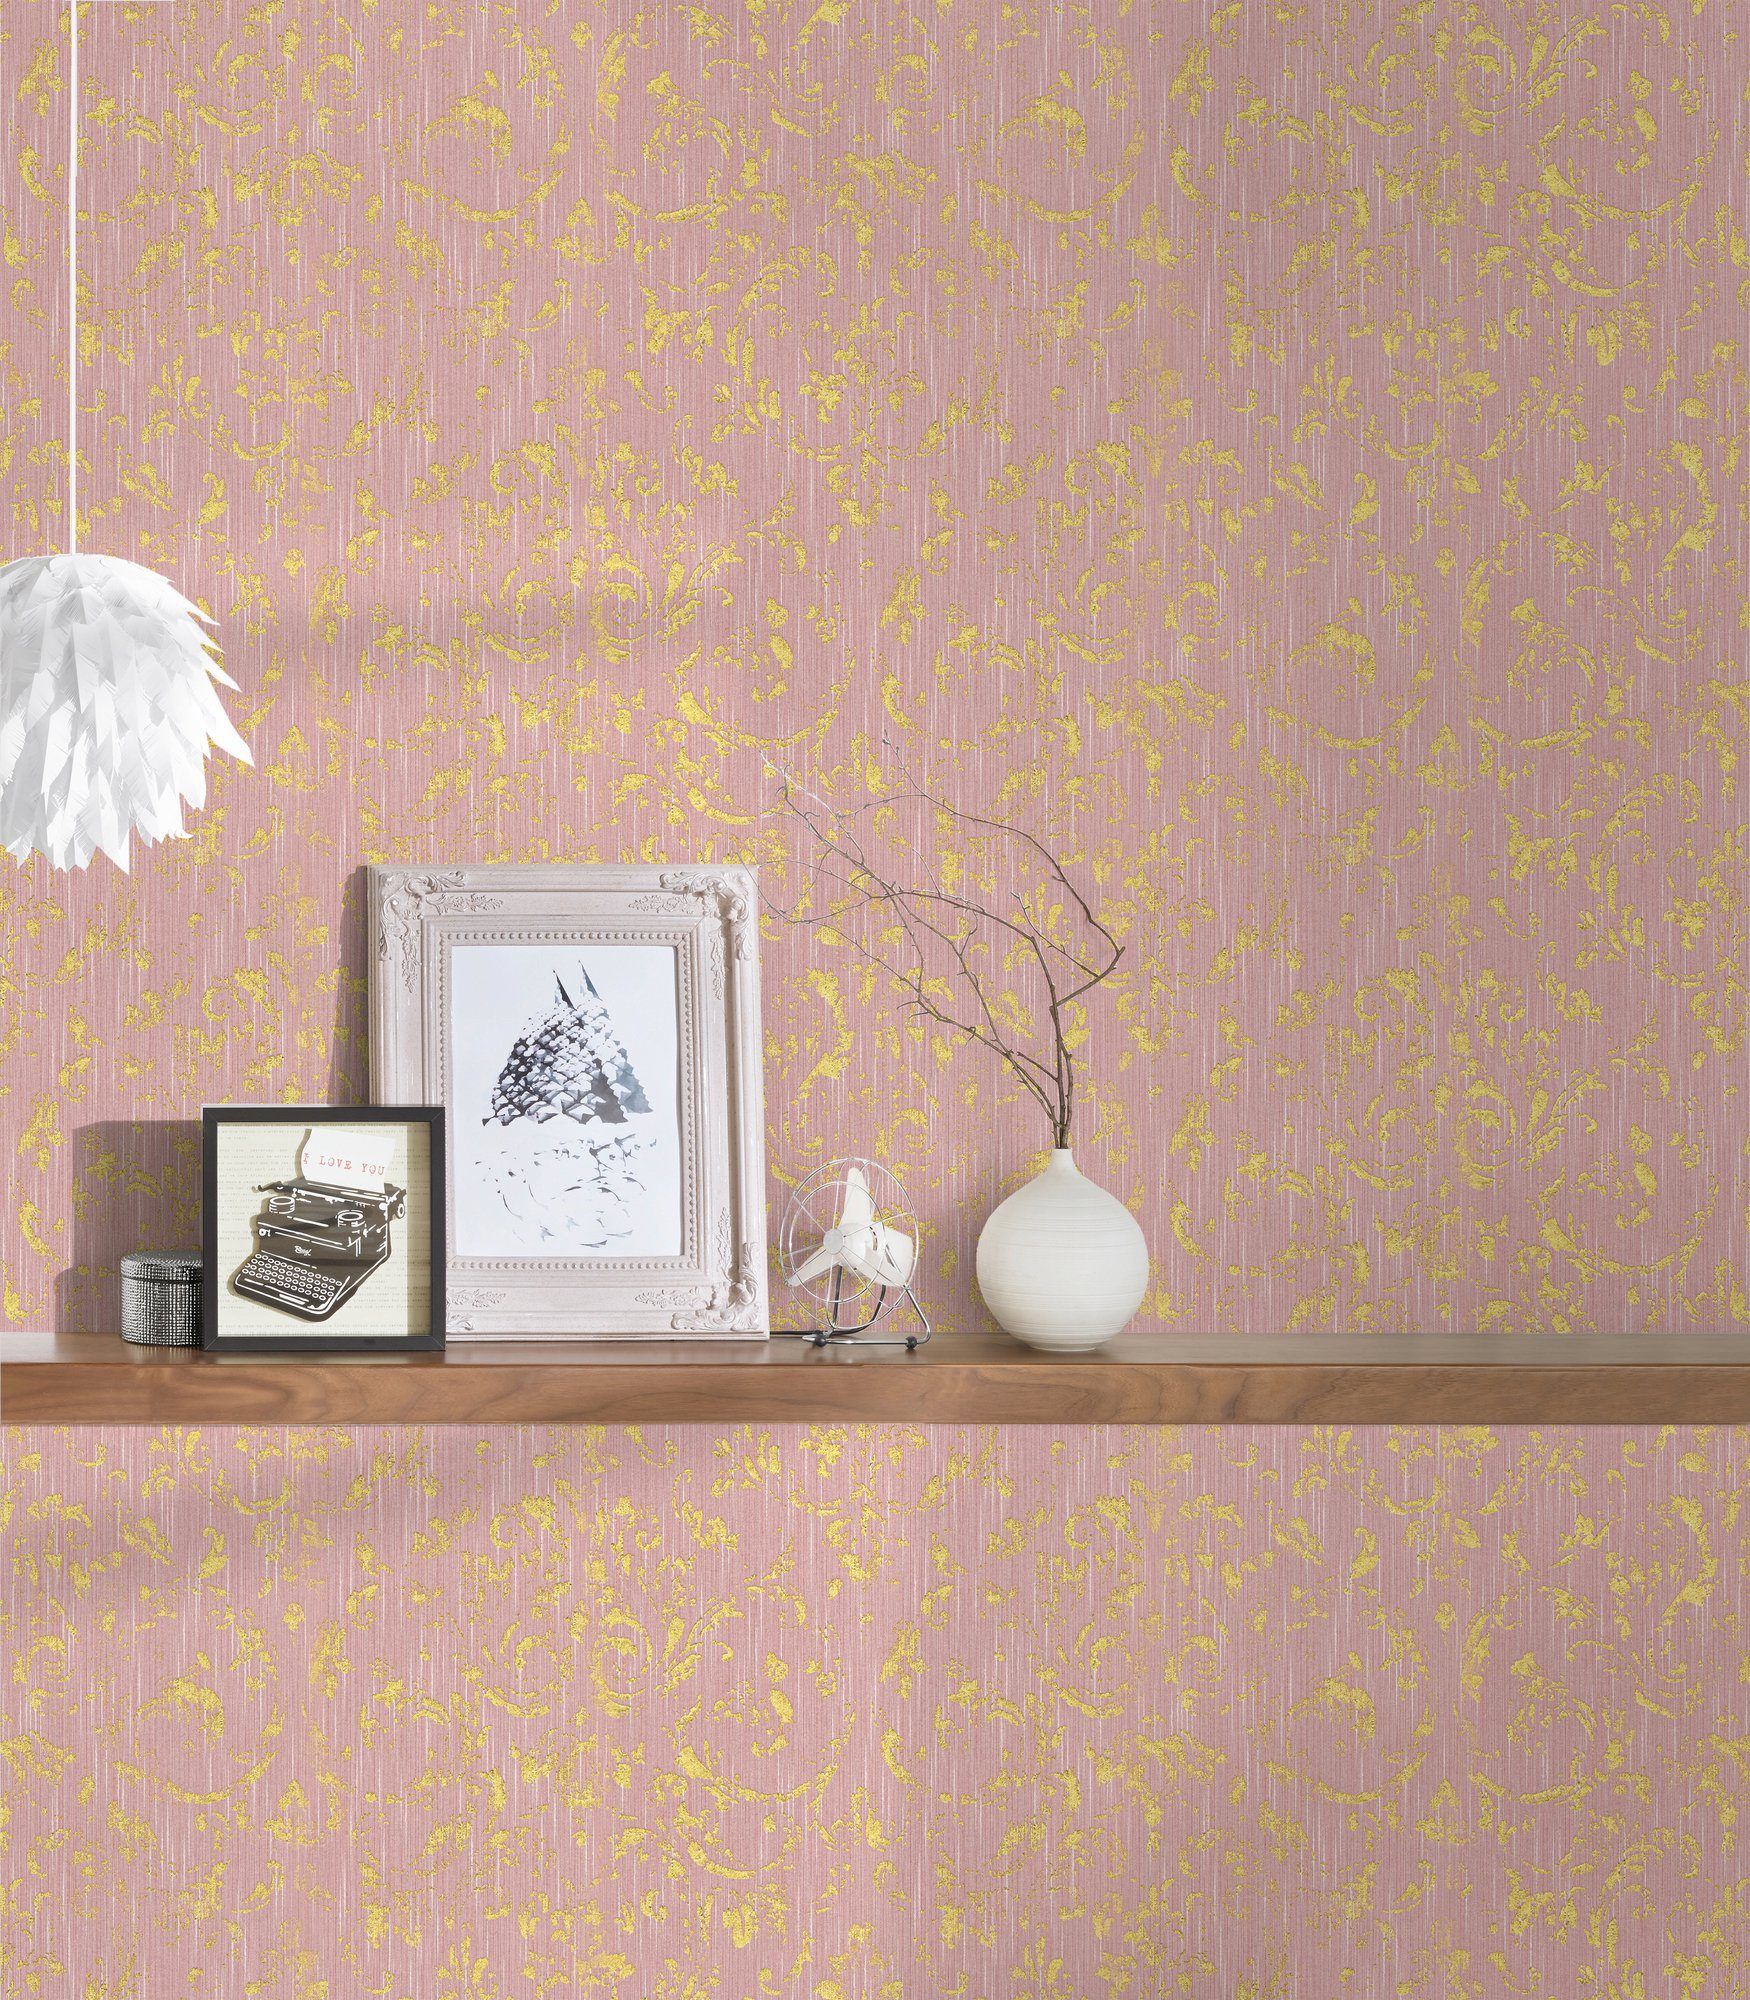 A.S. Ornament Textiltapete Barock Architects Paper Création glänzend, Barock, Tapete matt, samtig, rosa/gold Silk, Metallic